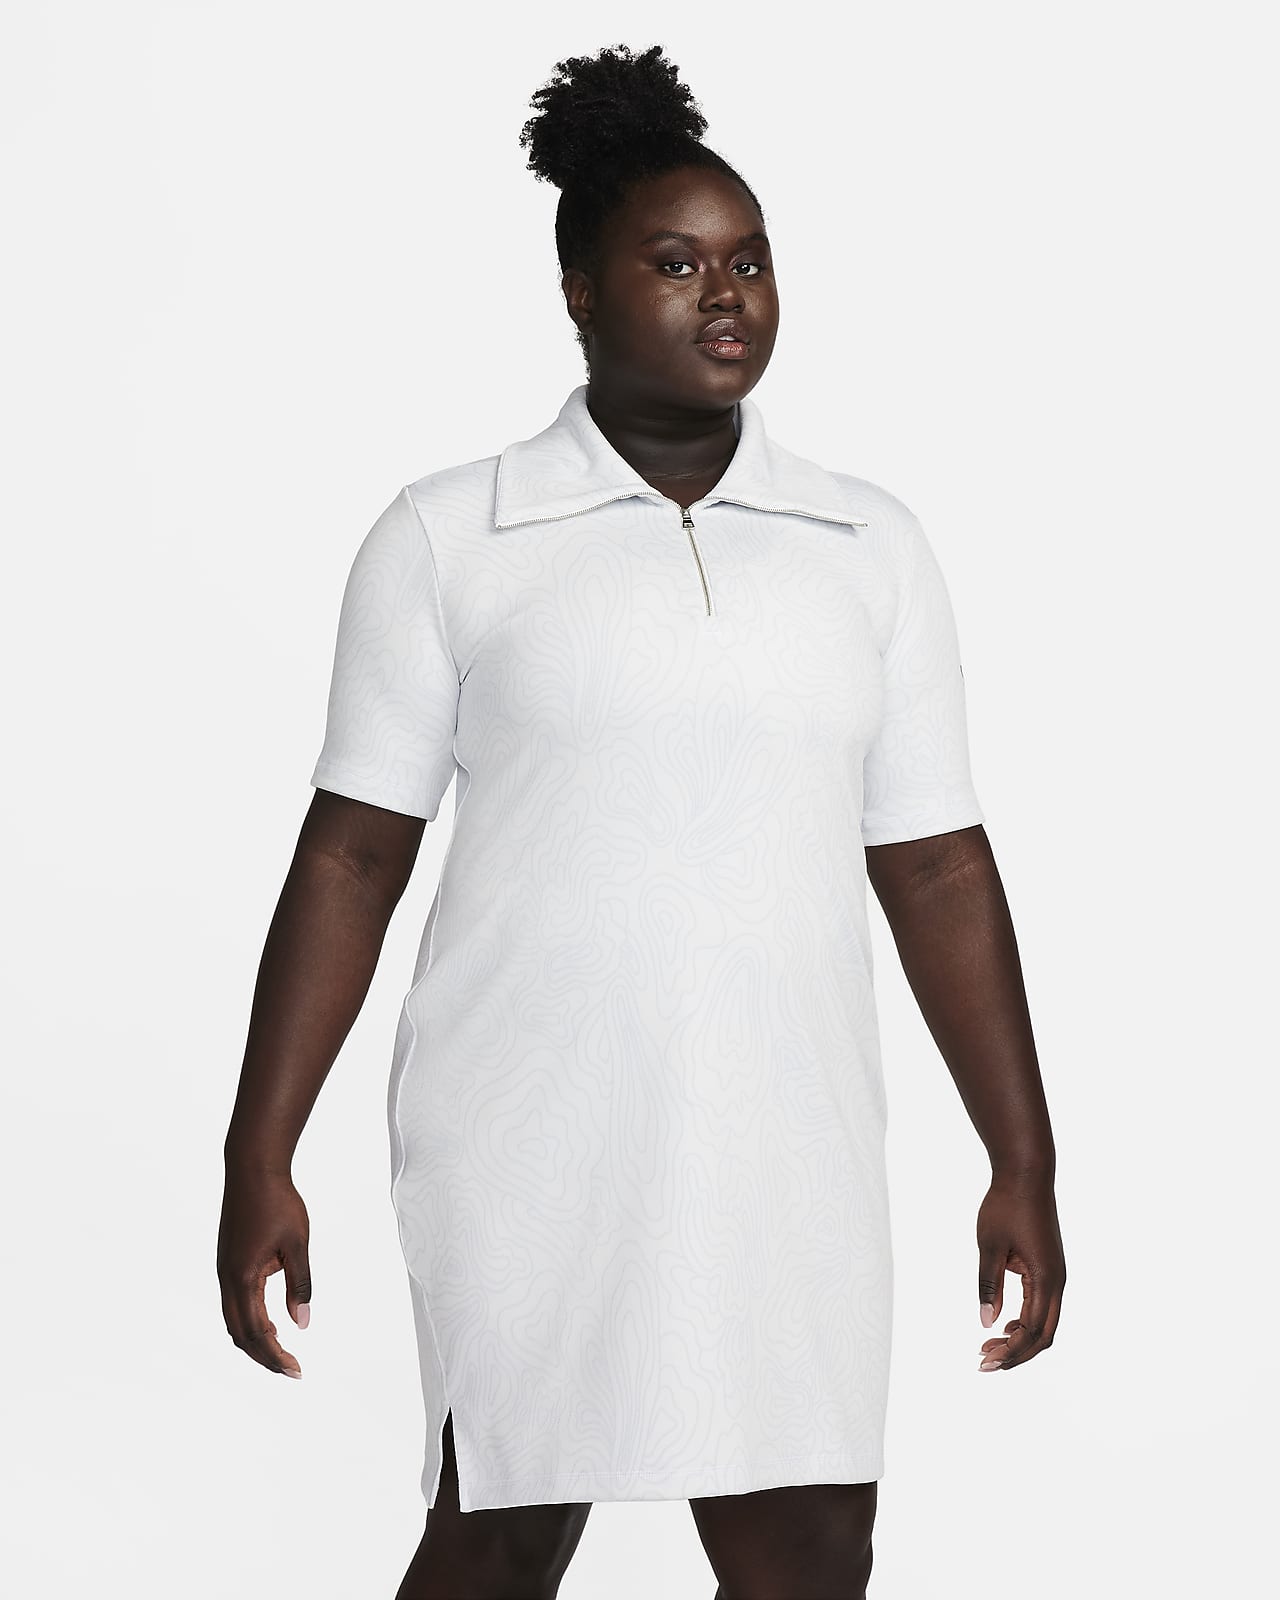 Nike x Serena Design Crew basketball jersey dress in black